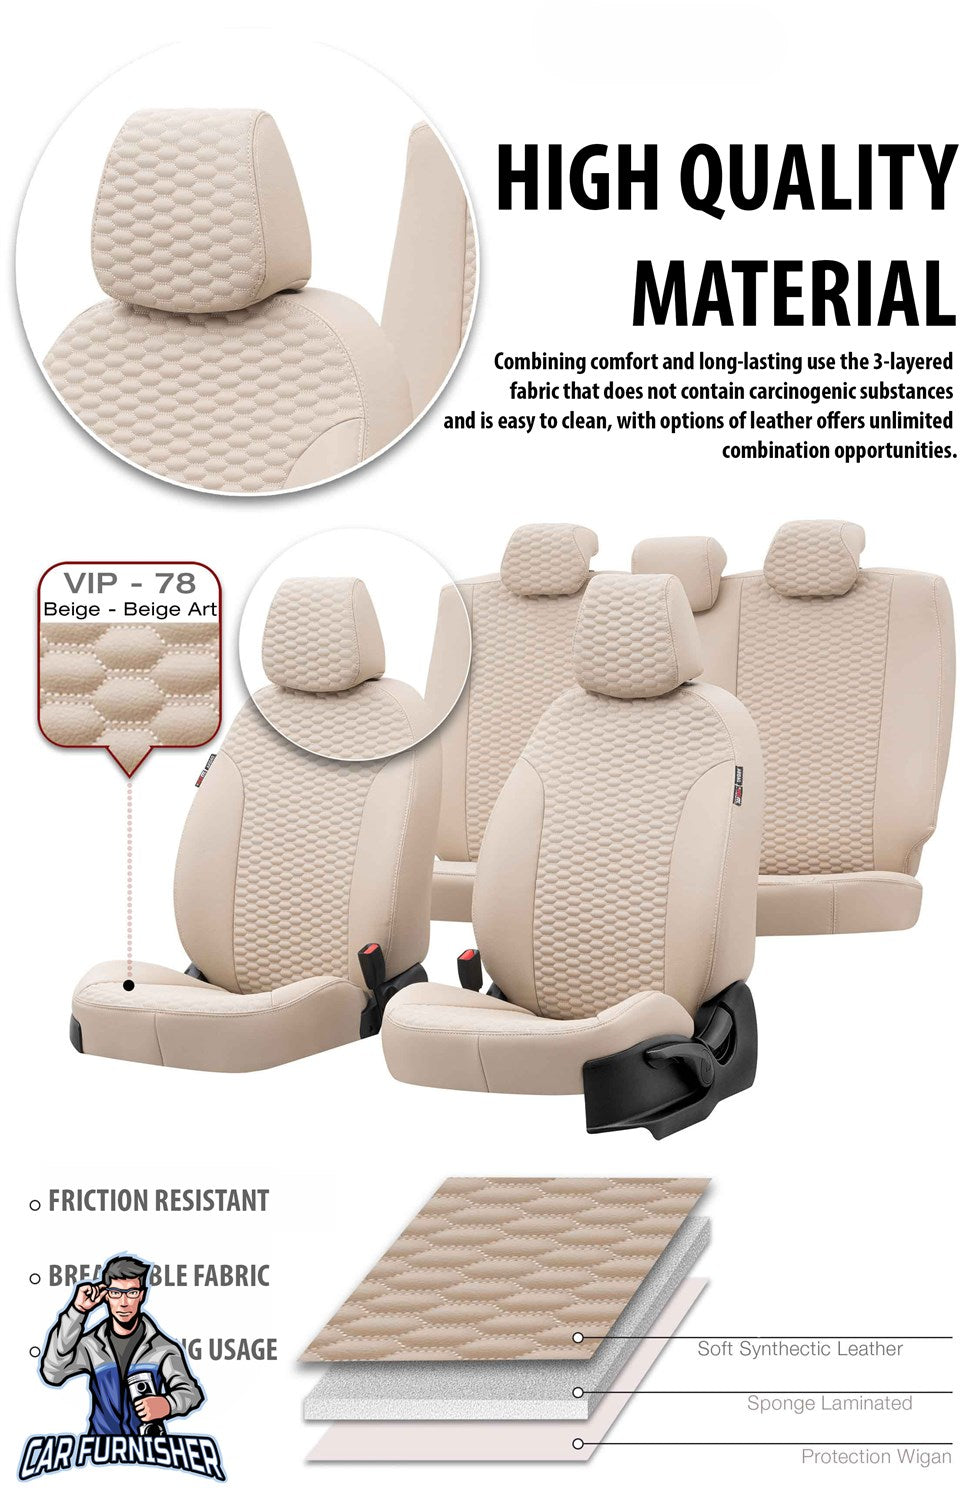 Skoda Yeti Seat Covers Tokyo Leather Design Ivory Leather